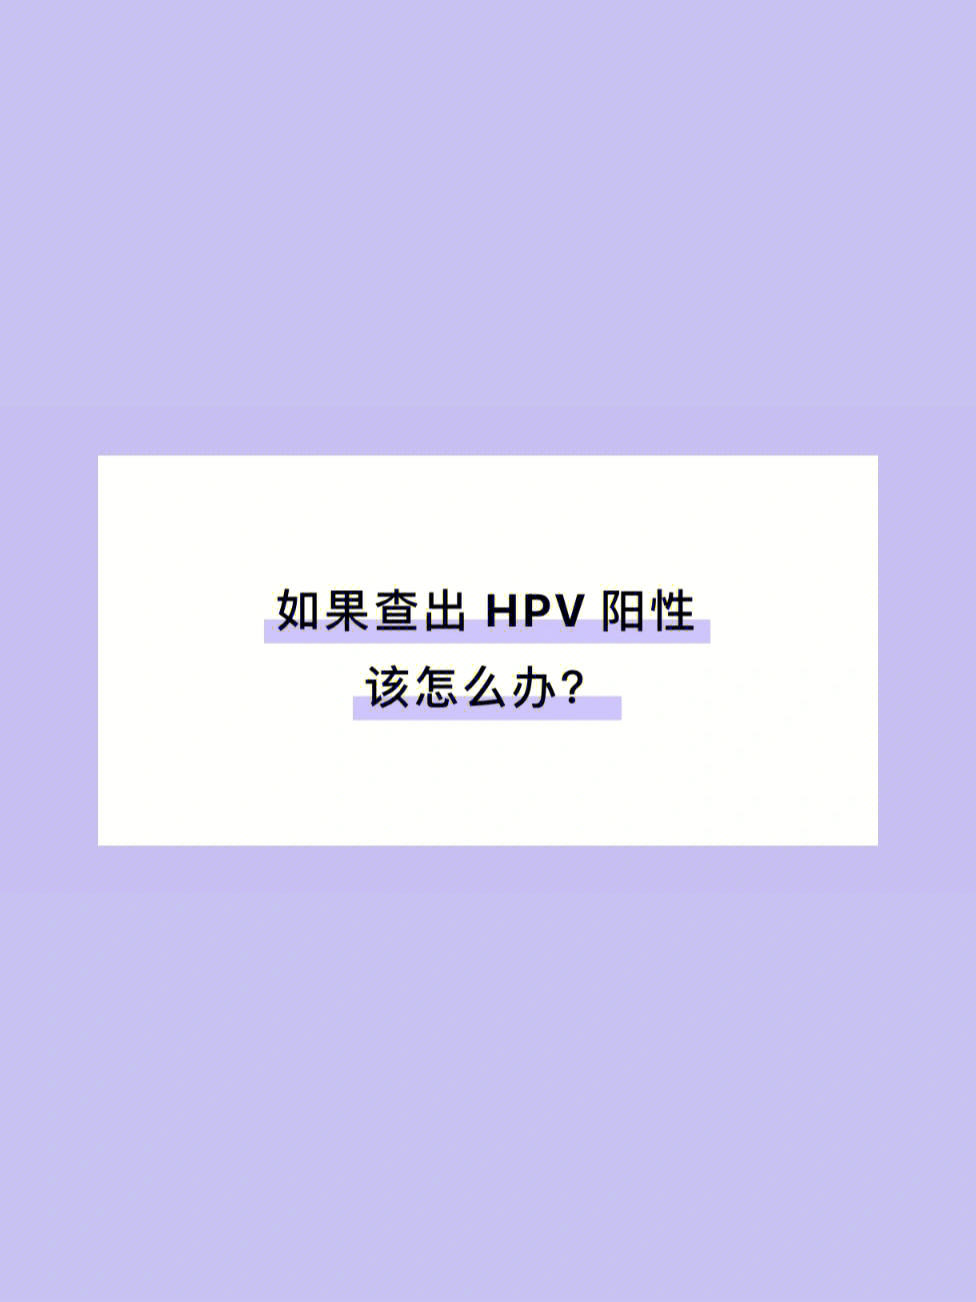 hpv图片初期阳性图片